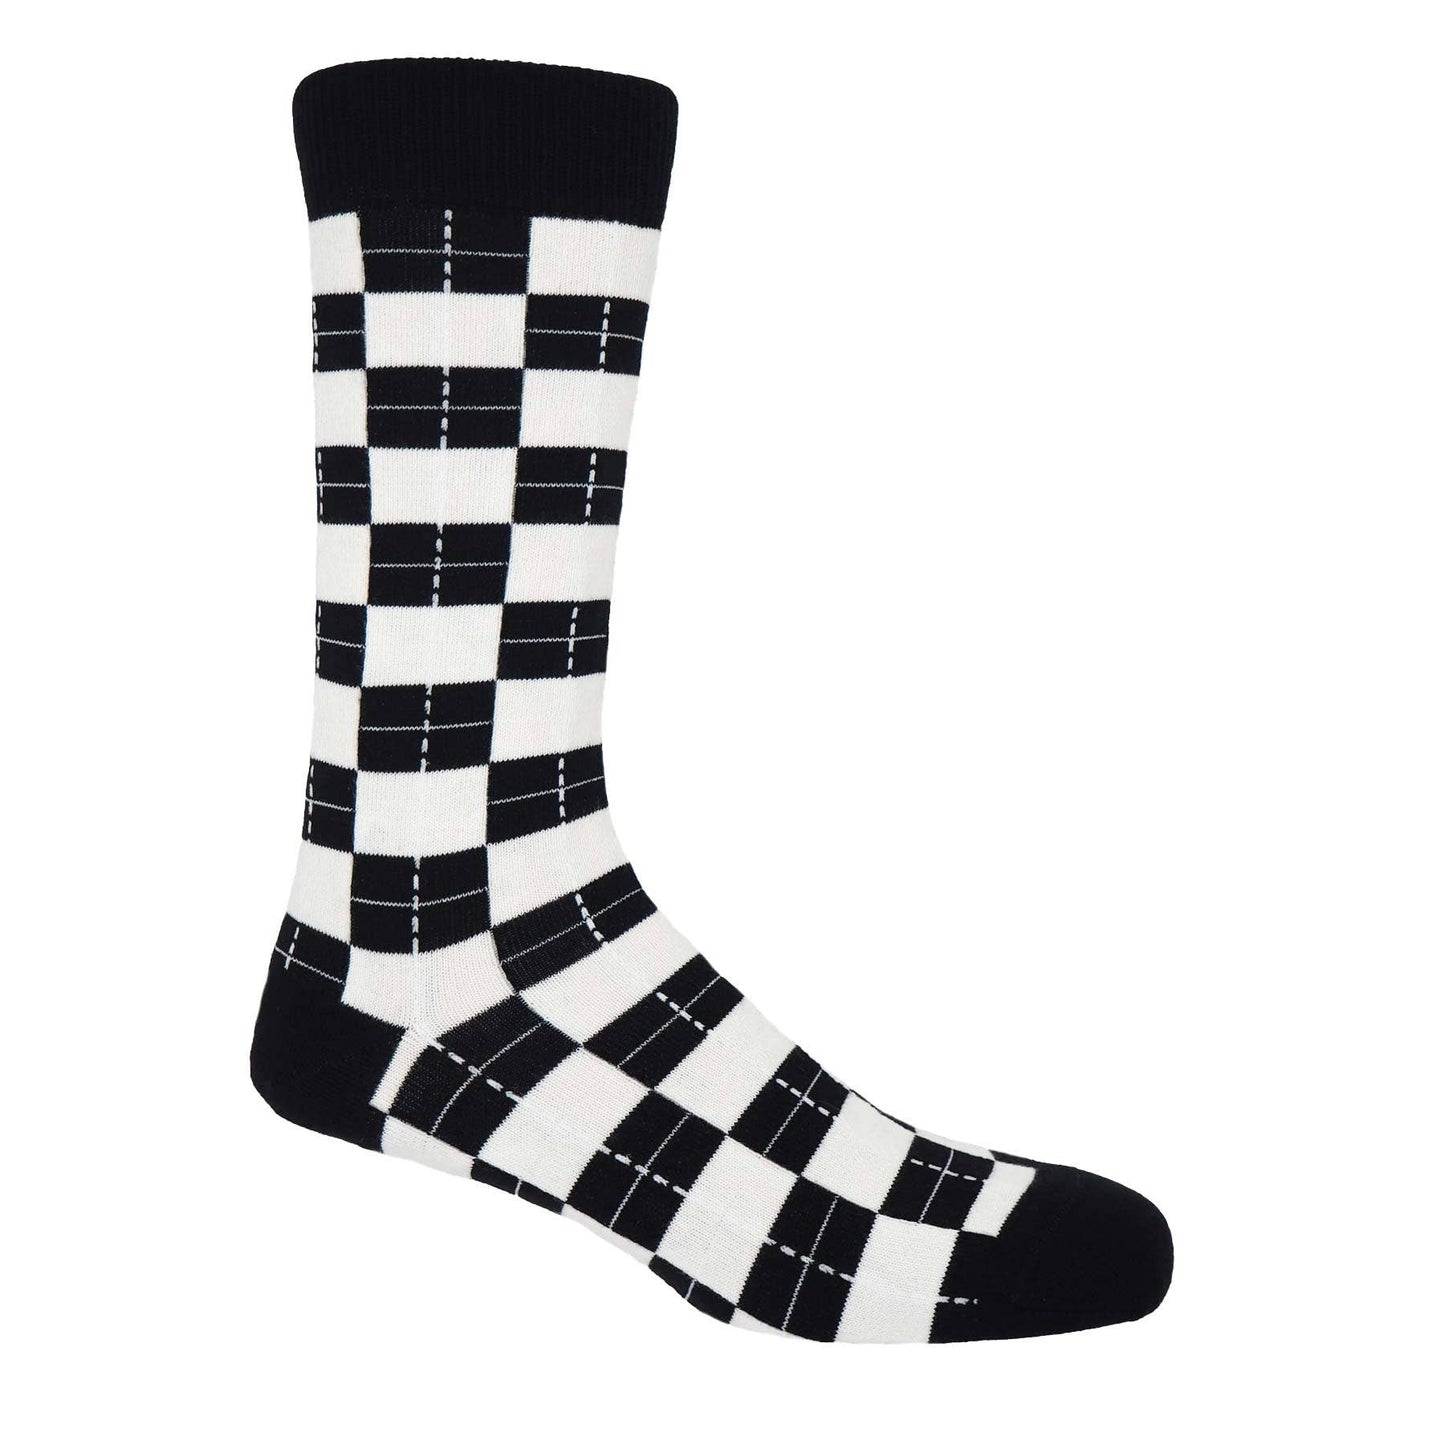 Peper Harow - Checkmate Men's Socks - Black